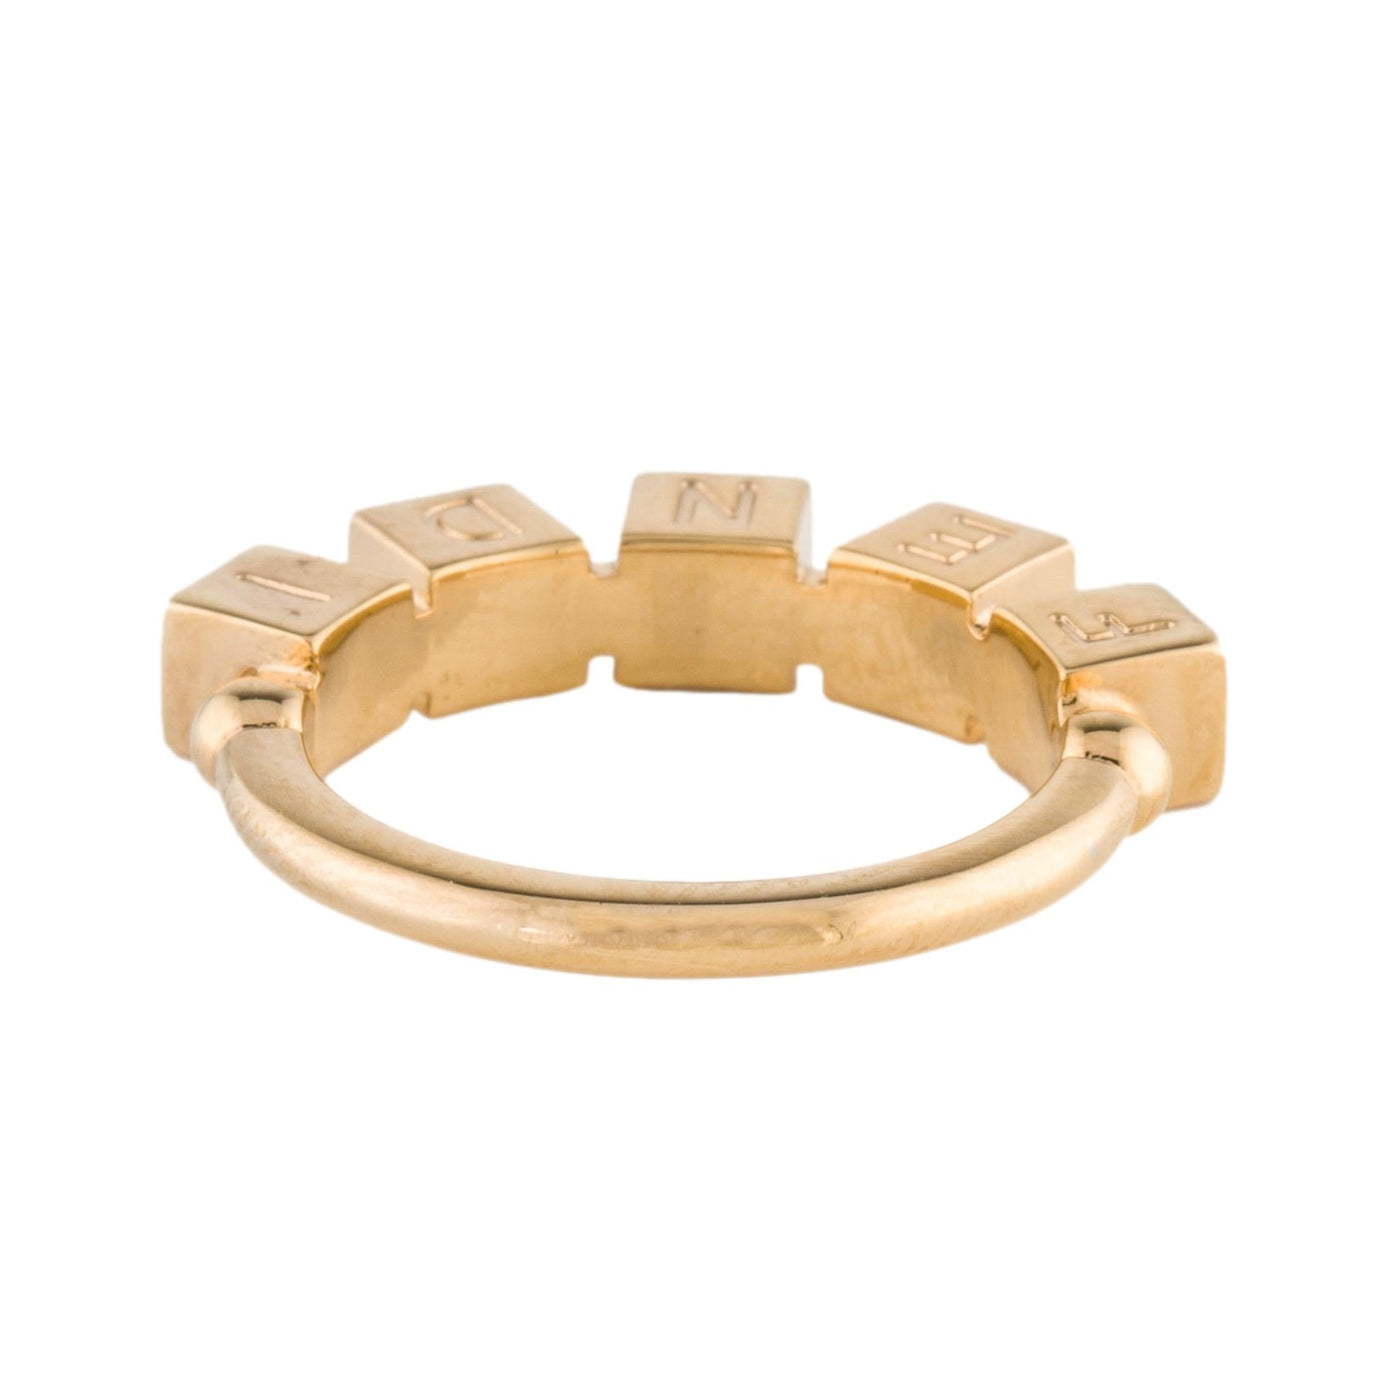 Fendi Fendrigraphy Letters Gold Metal Ring Size Medium - LUXURYMRKT